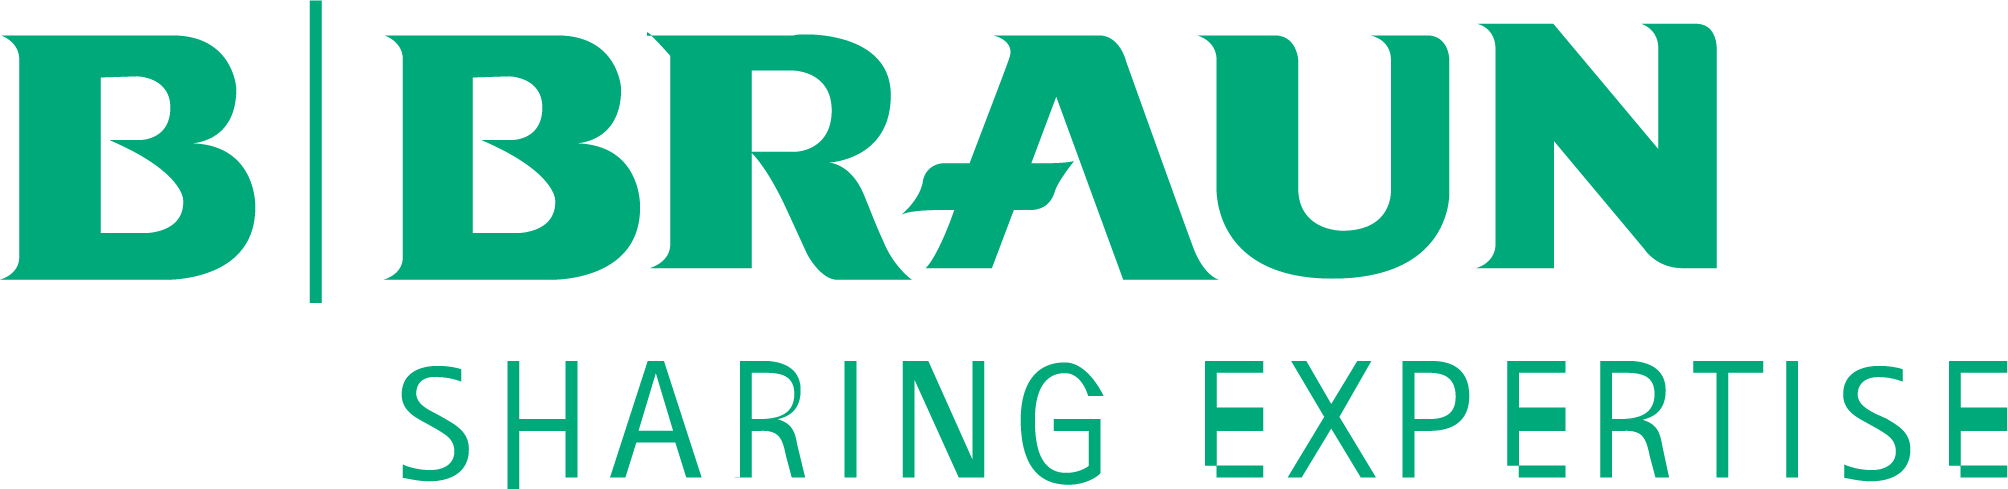 BBraun logo